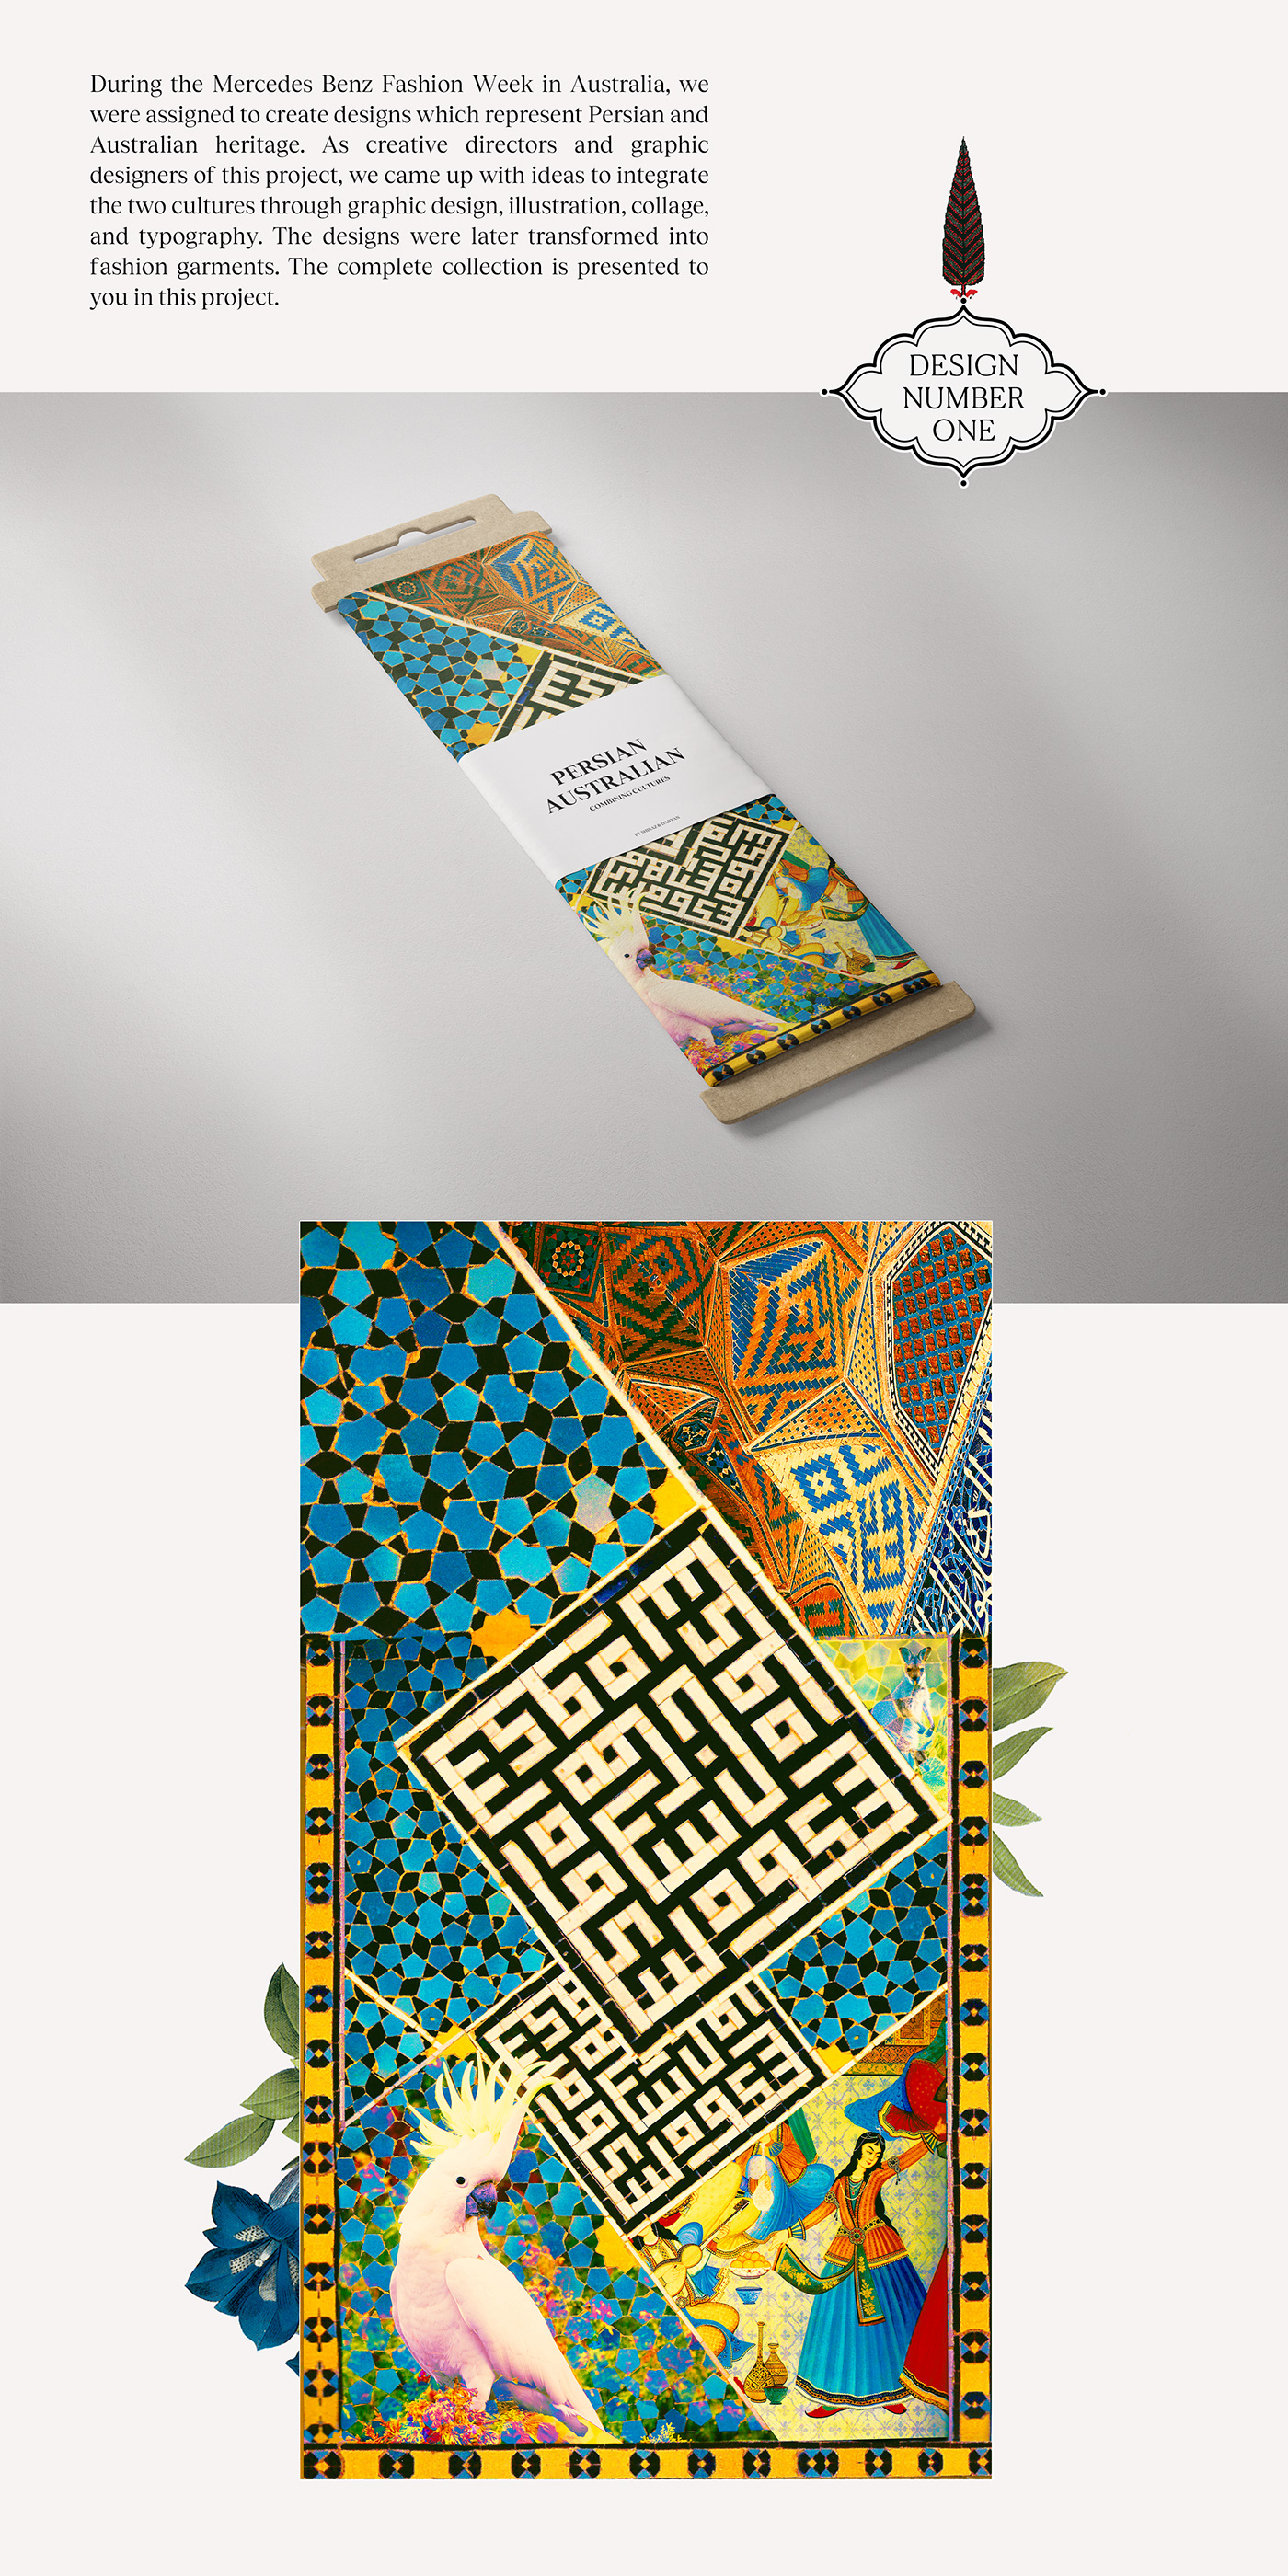 Australia FASHFEST fashion week heritage Iran Mercedes Benz Fashion textile design  collage collageartwork culture